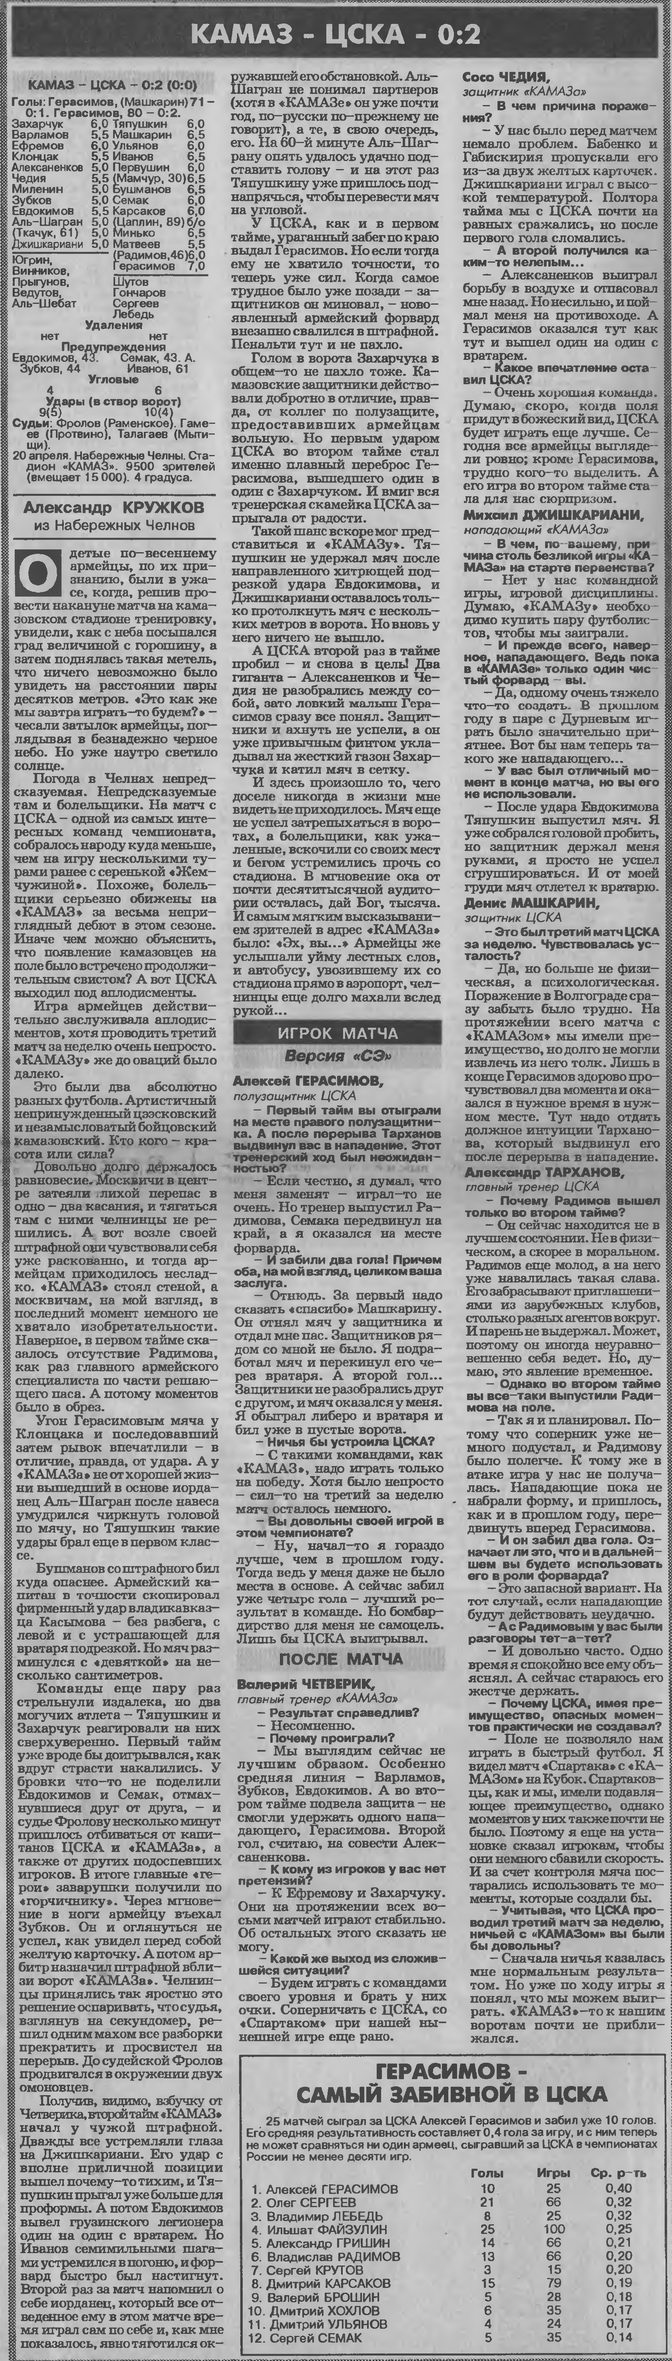 1996-04-20.KamAZ-CSKA.1